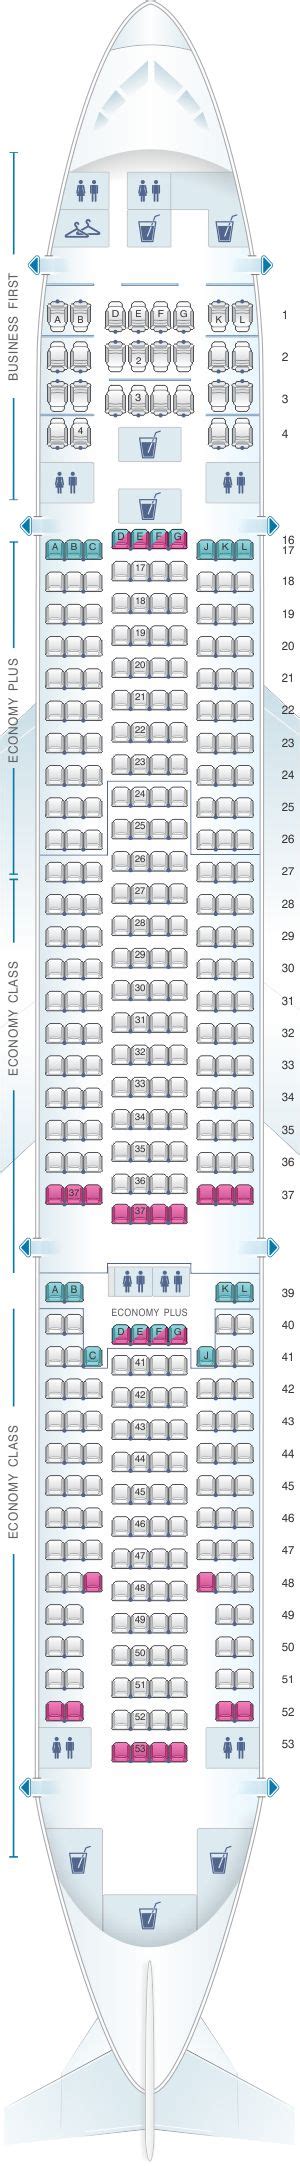 United Premium Economy Seating Chart Boeing 777